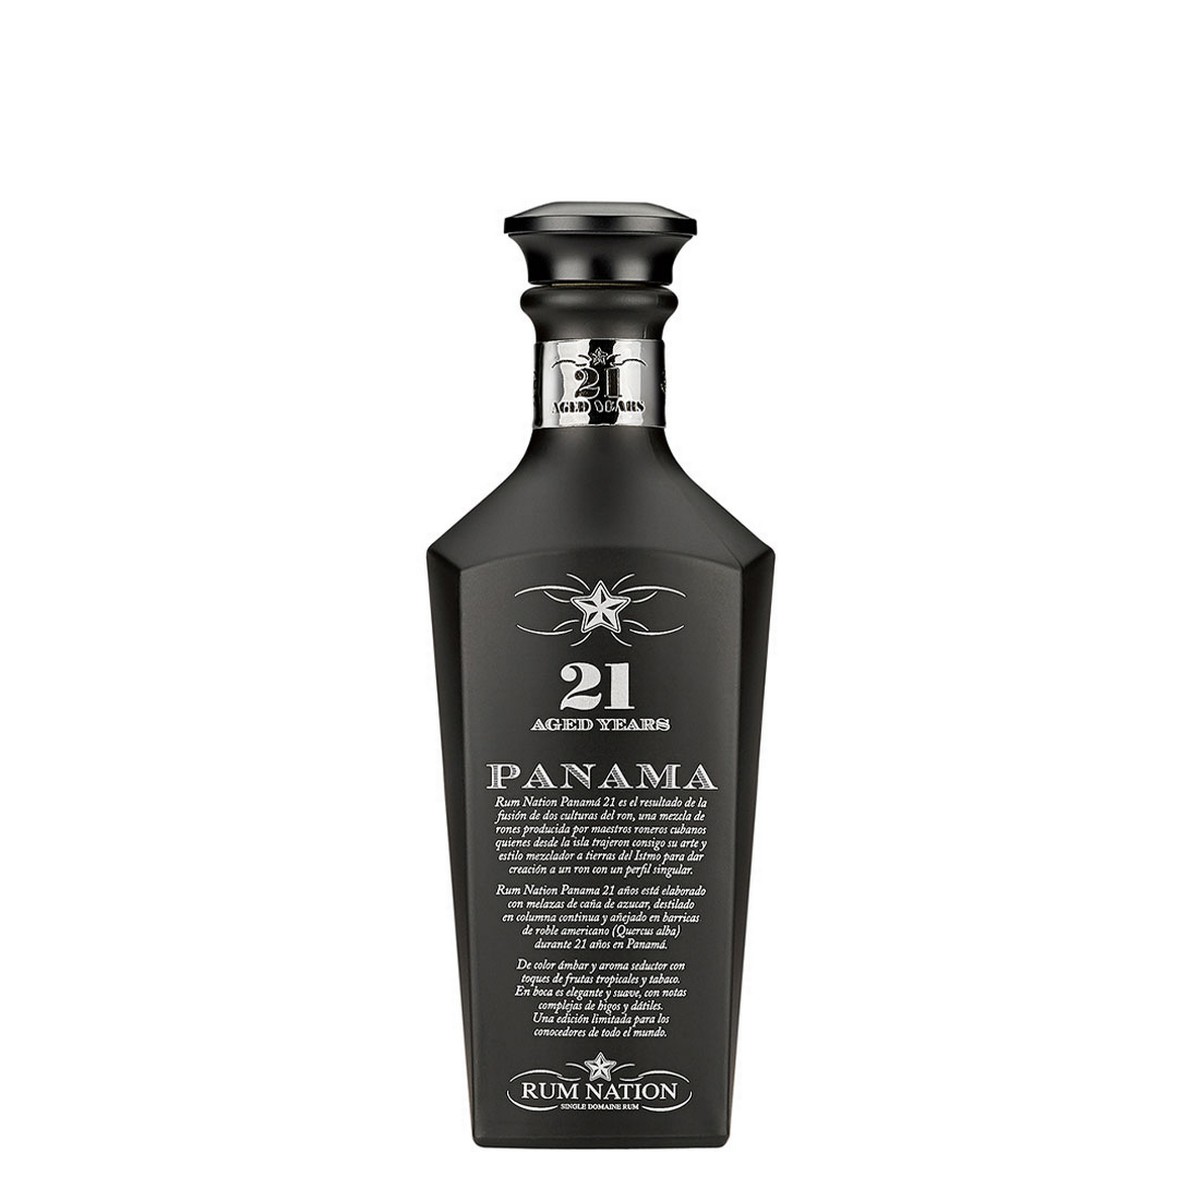 Rum Nation Panama 21 Y.O. Black